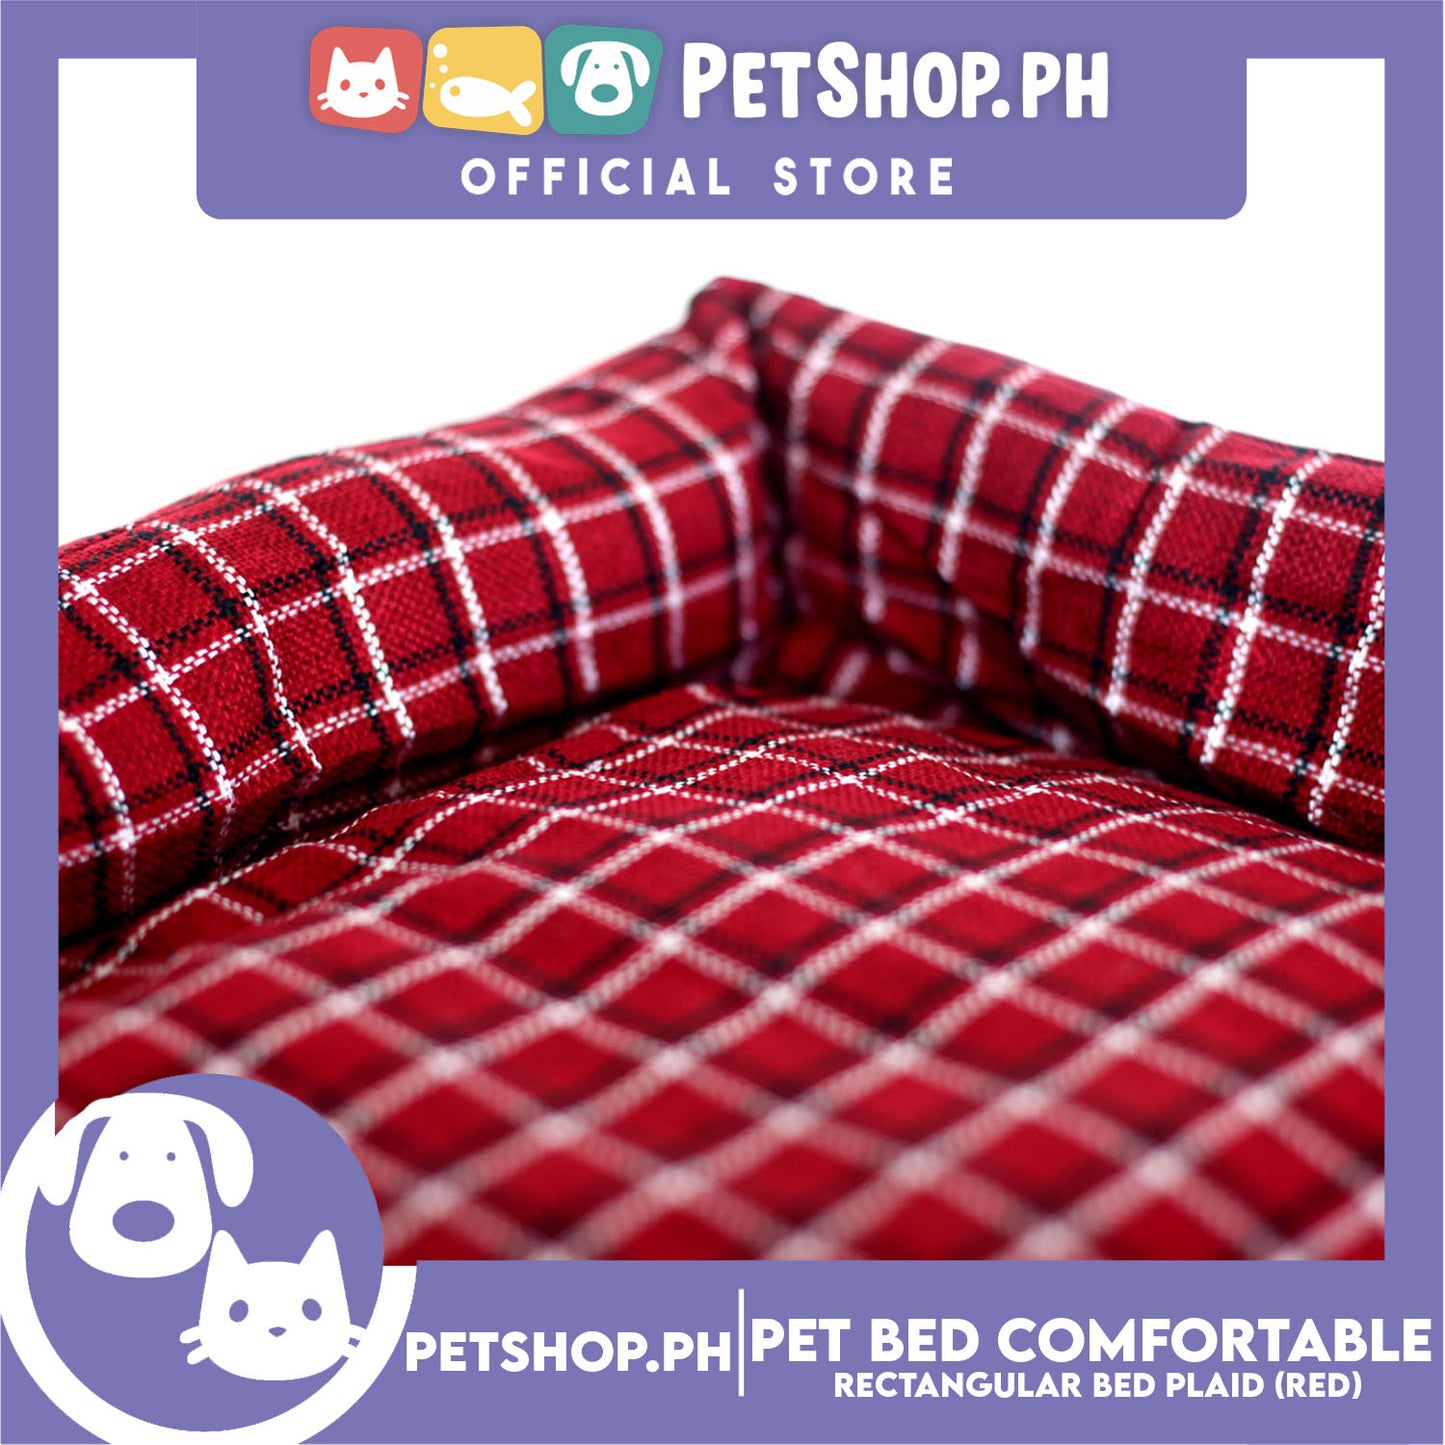 Pet Bed Comfortable Rectangular Pet Bed Plaid Design 50x41x10cm Medium for Dogs & Cats (Red)